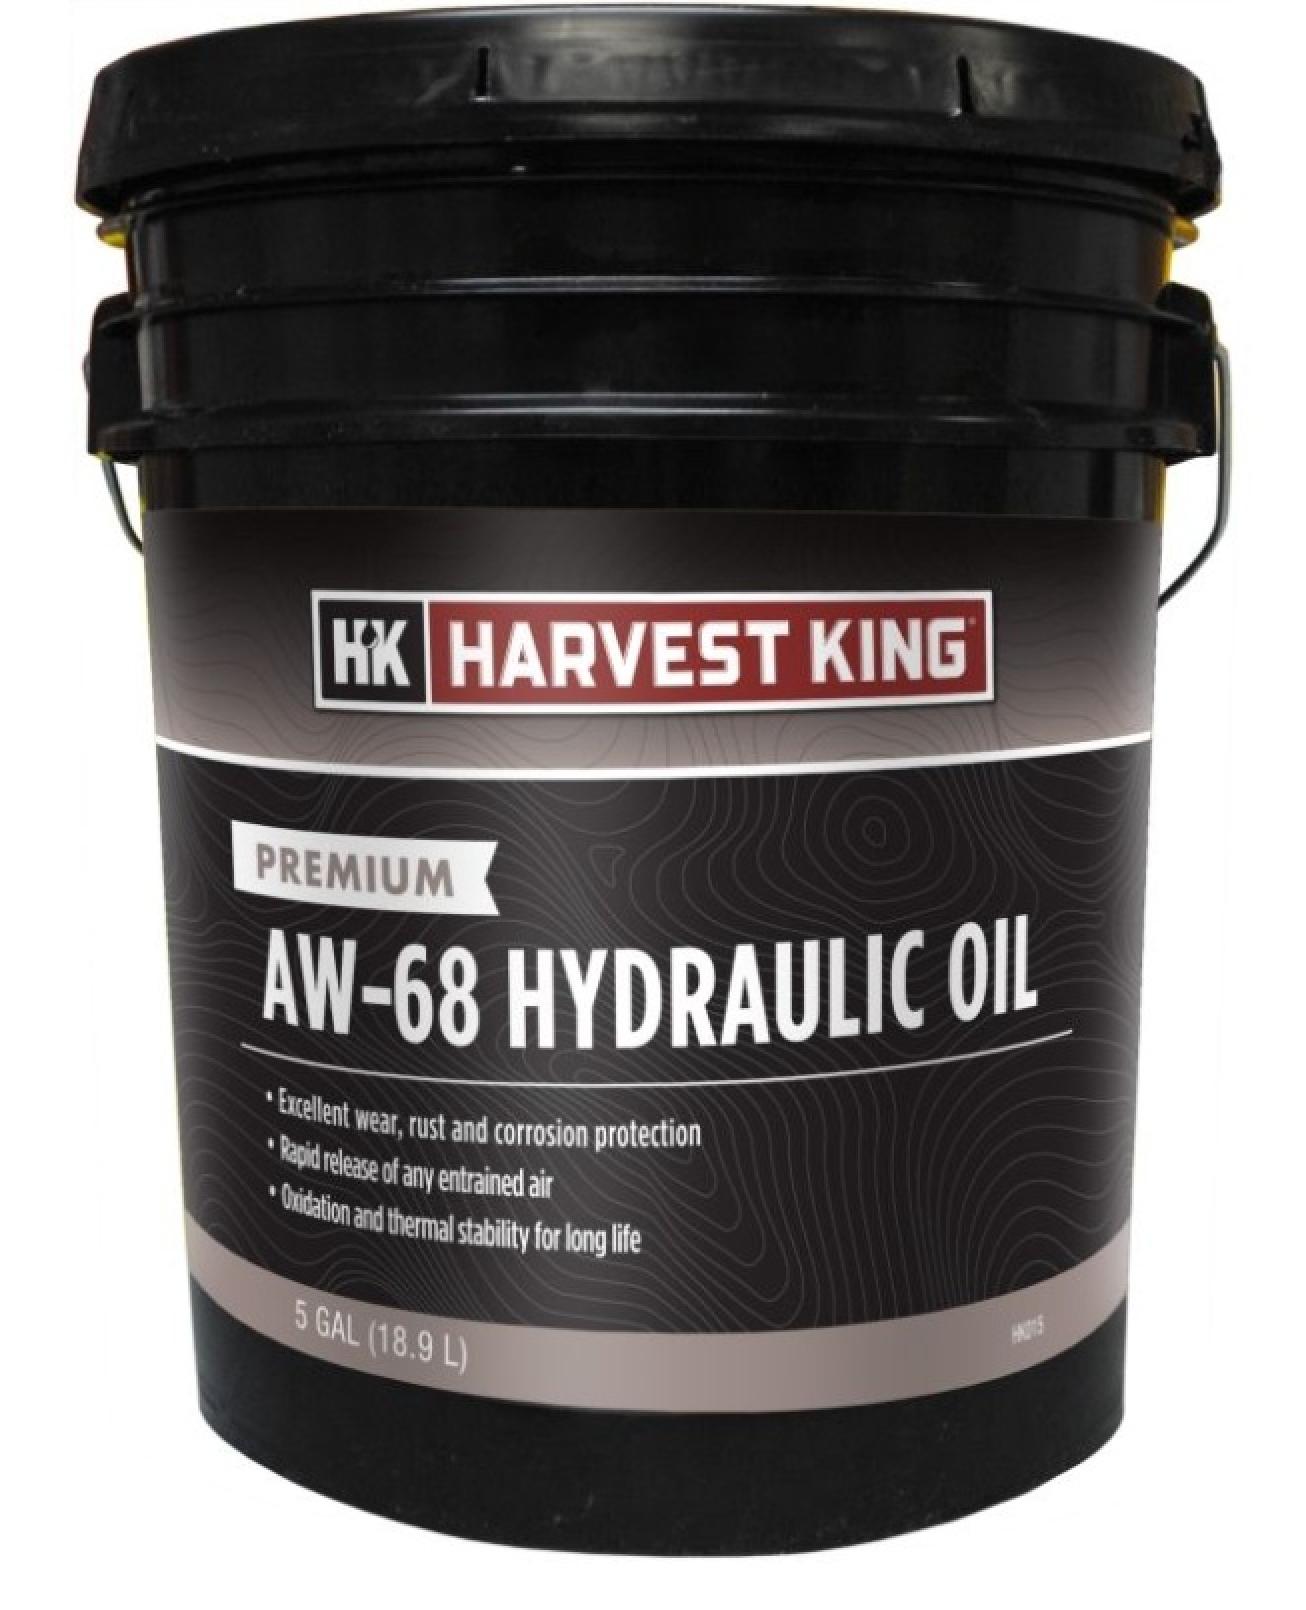 Harvest King Premium AW-68 Hydraulic Oil